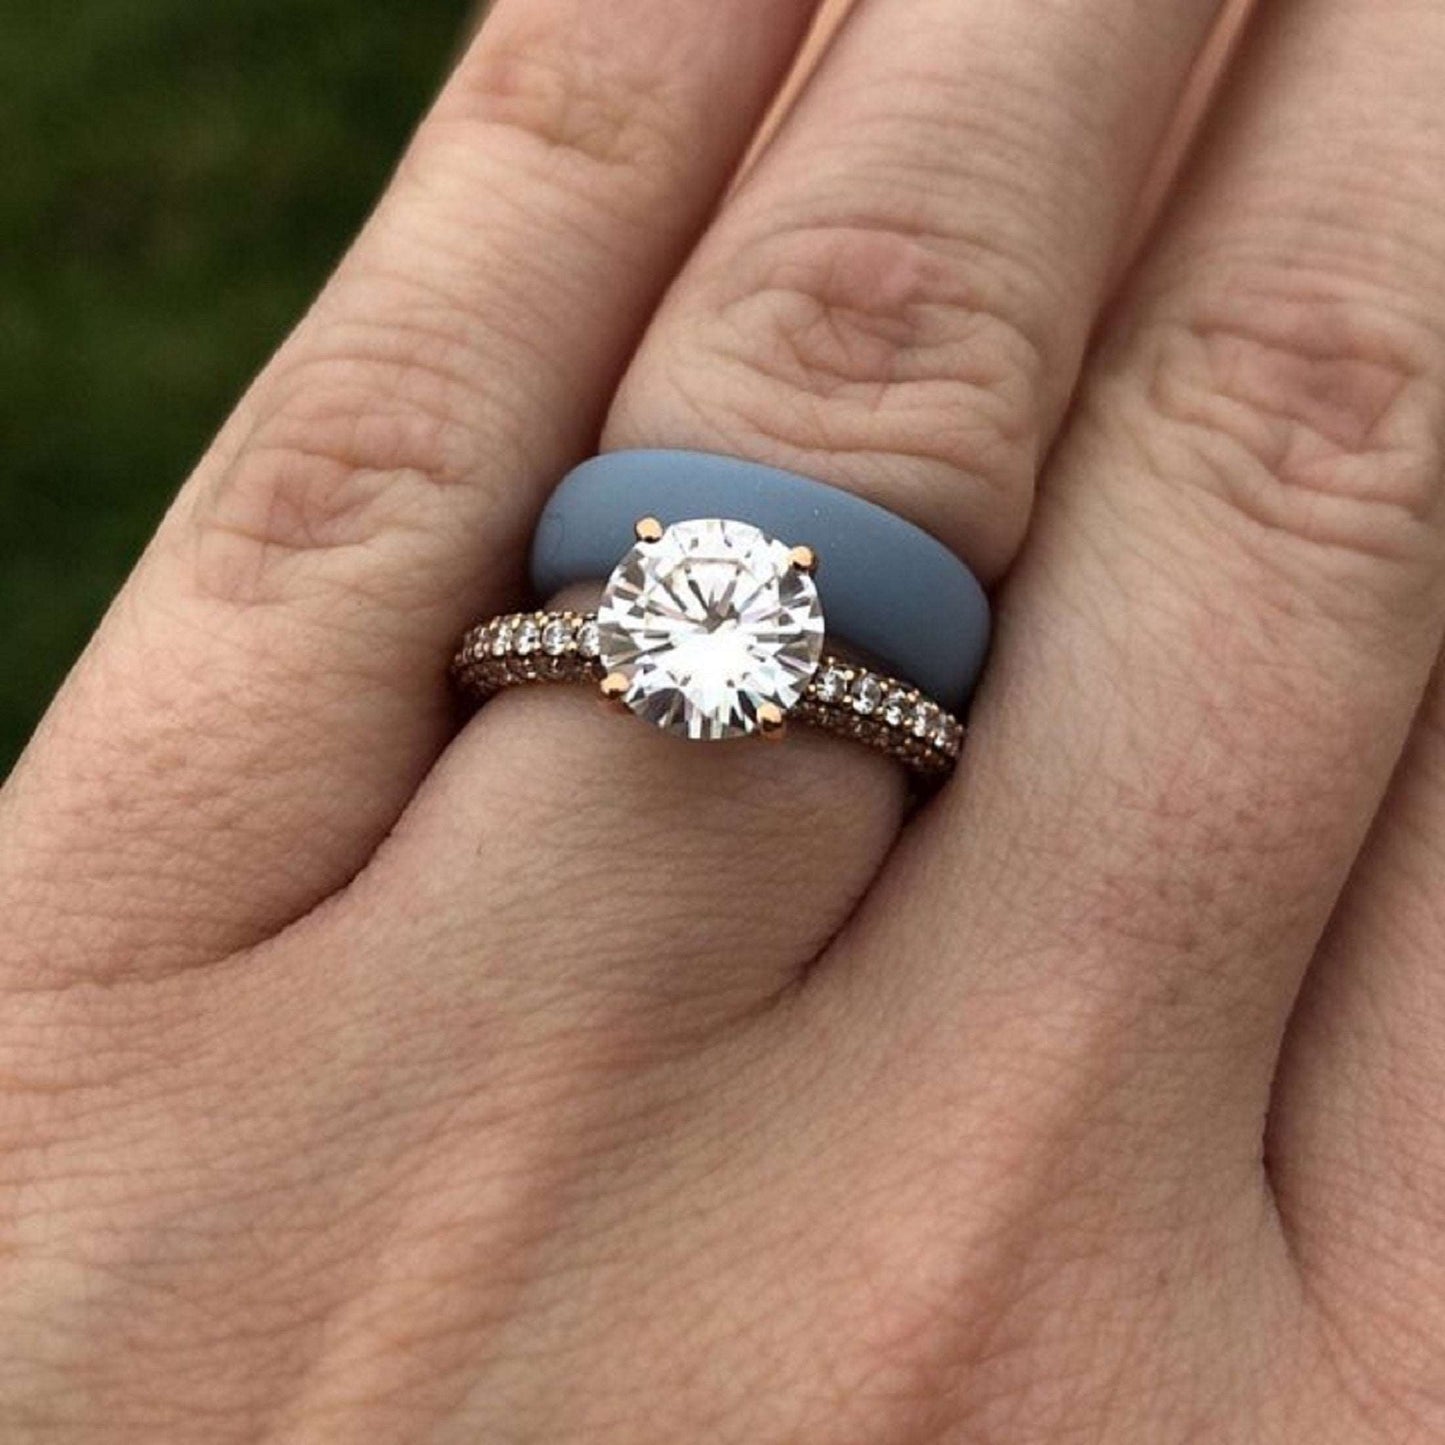 Women's Silicone Wedding Ring